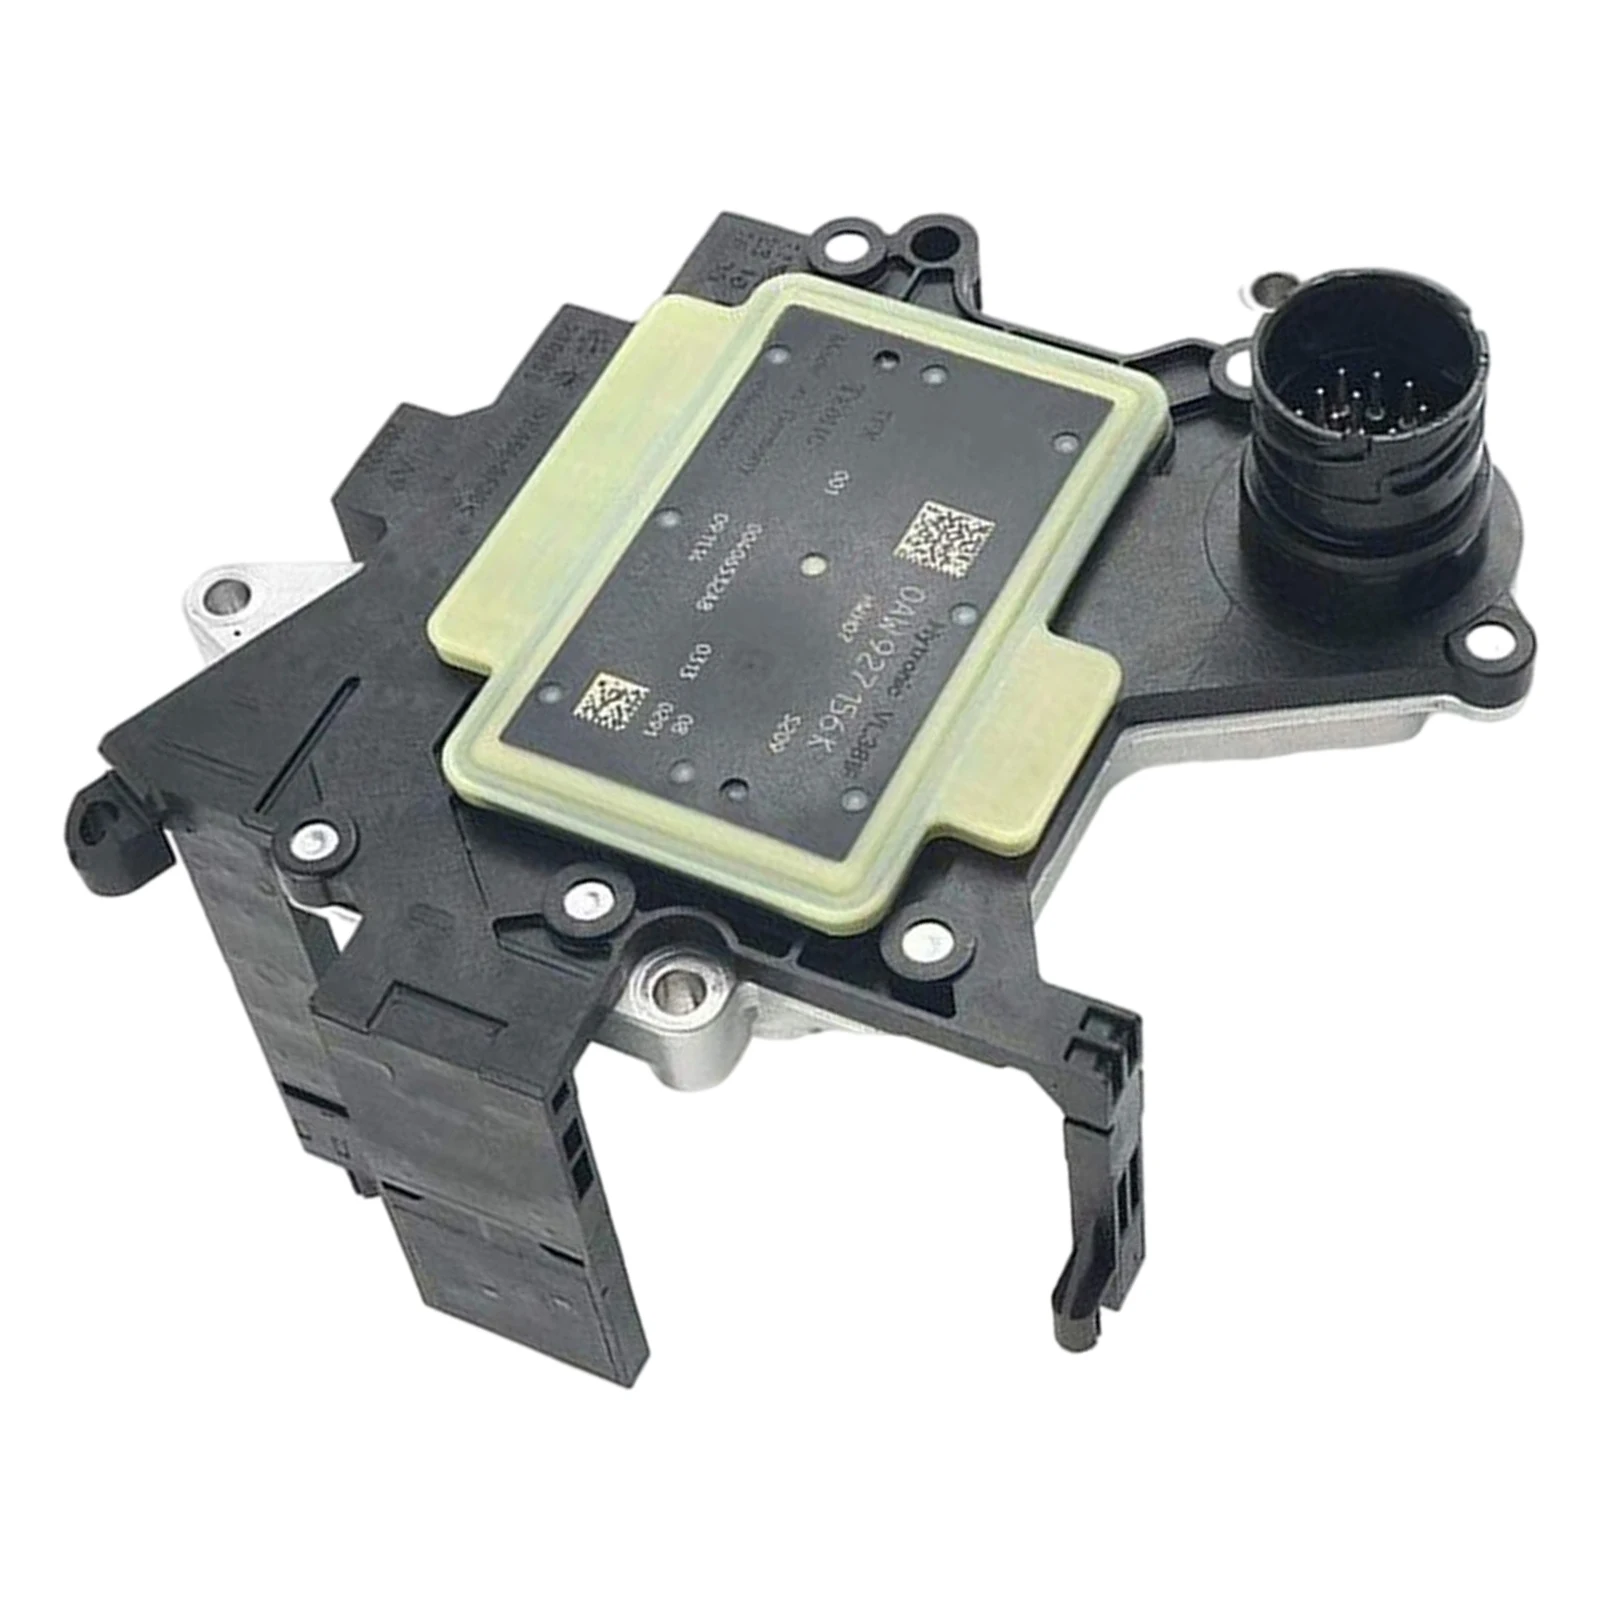  Transmission Tcu Tcm 0AW Cvt Automatic Transmission Control Unit Durable Metal for Audi A6 Car Parts